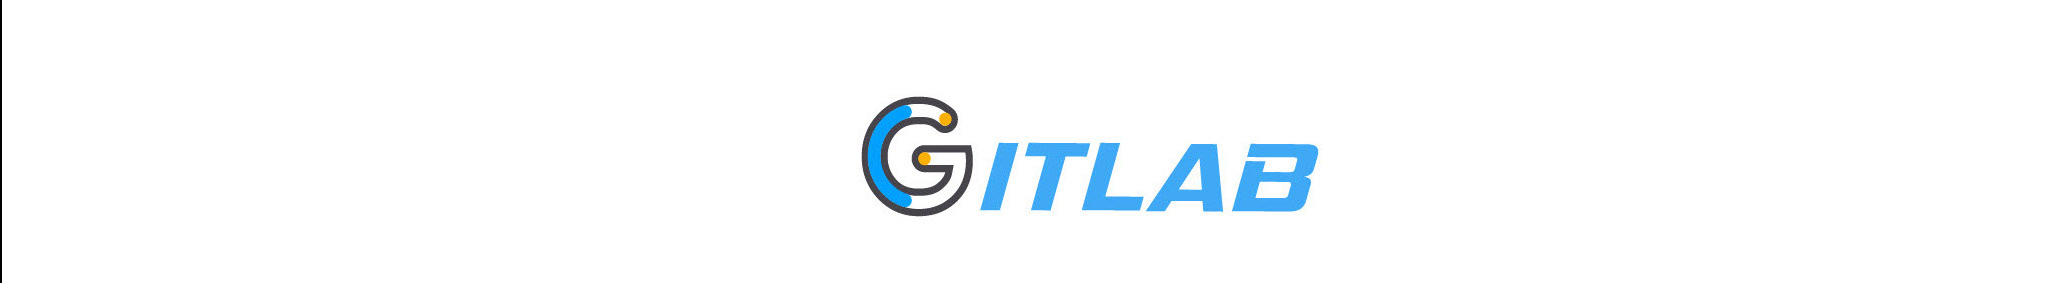 git lab's profile banner